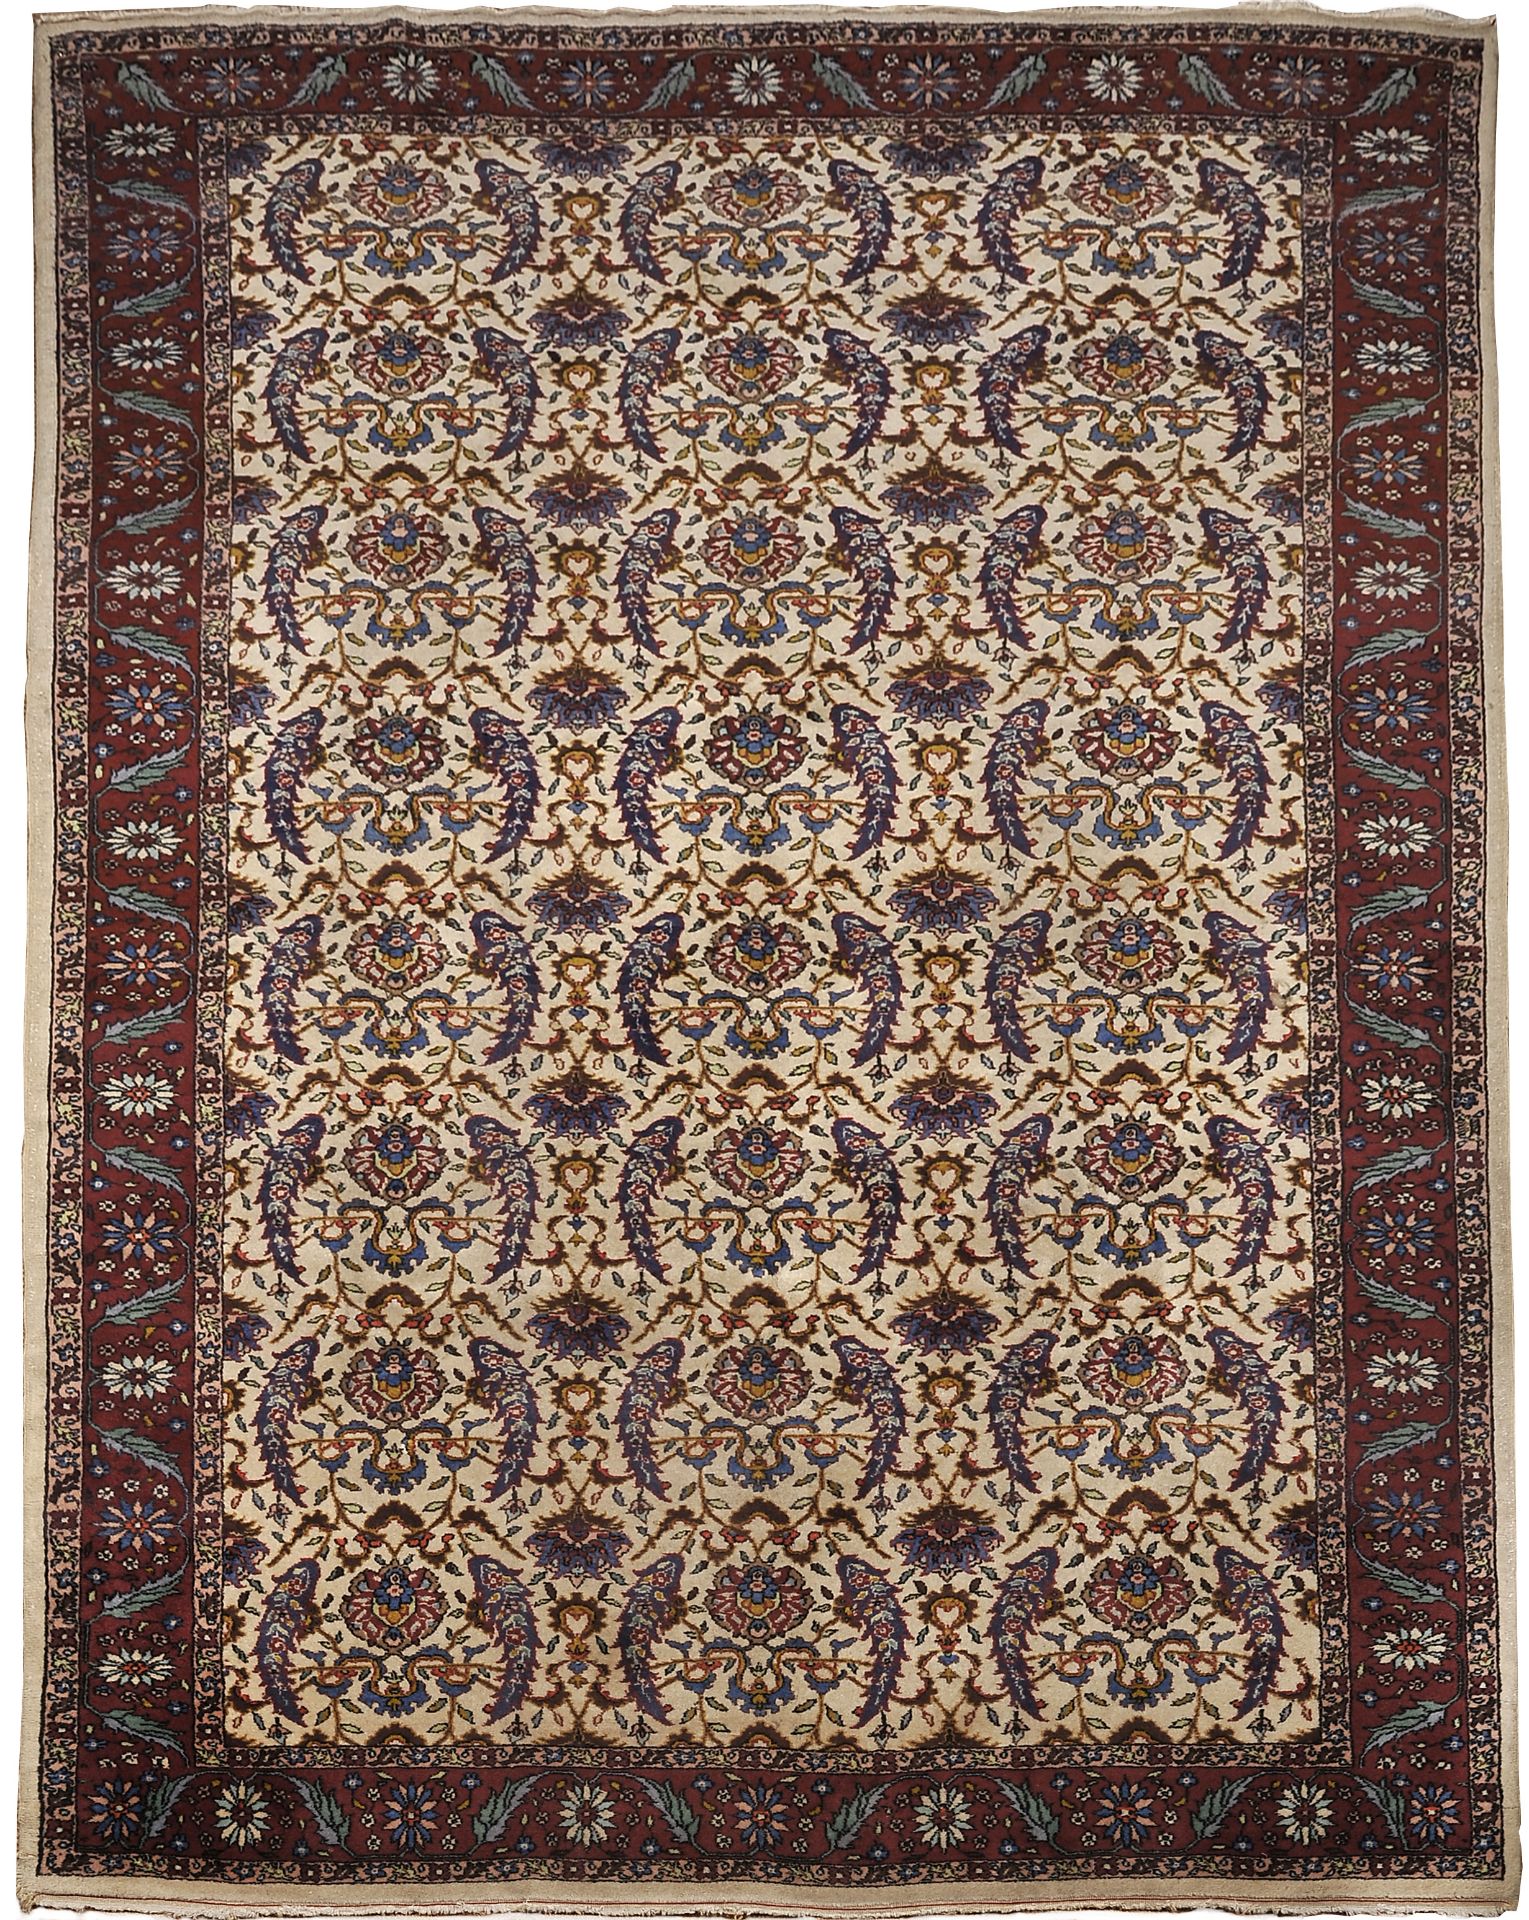 An Isparta carpet